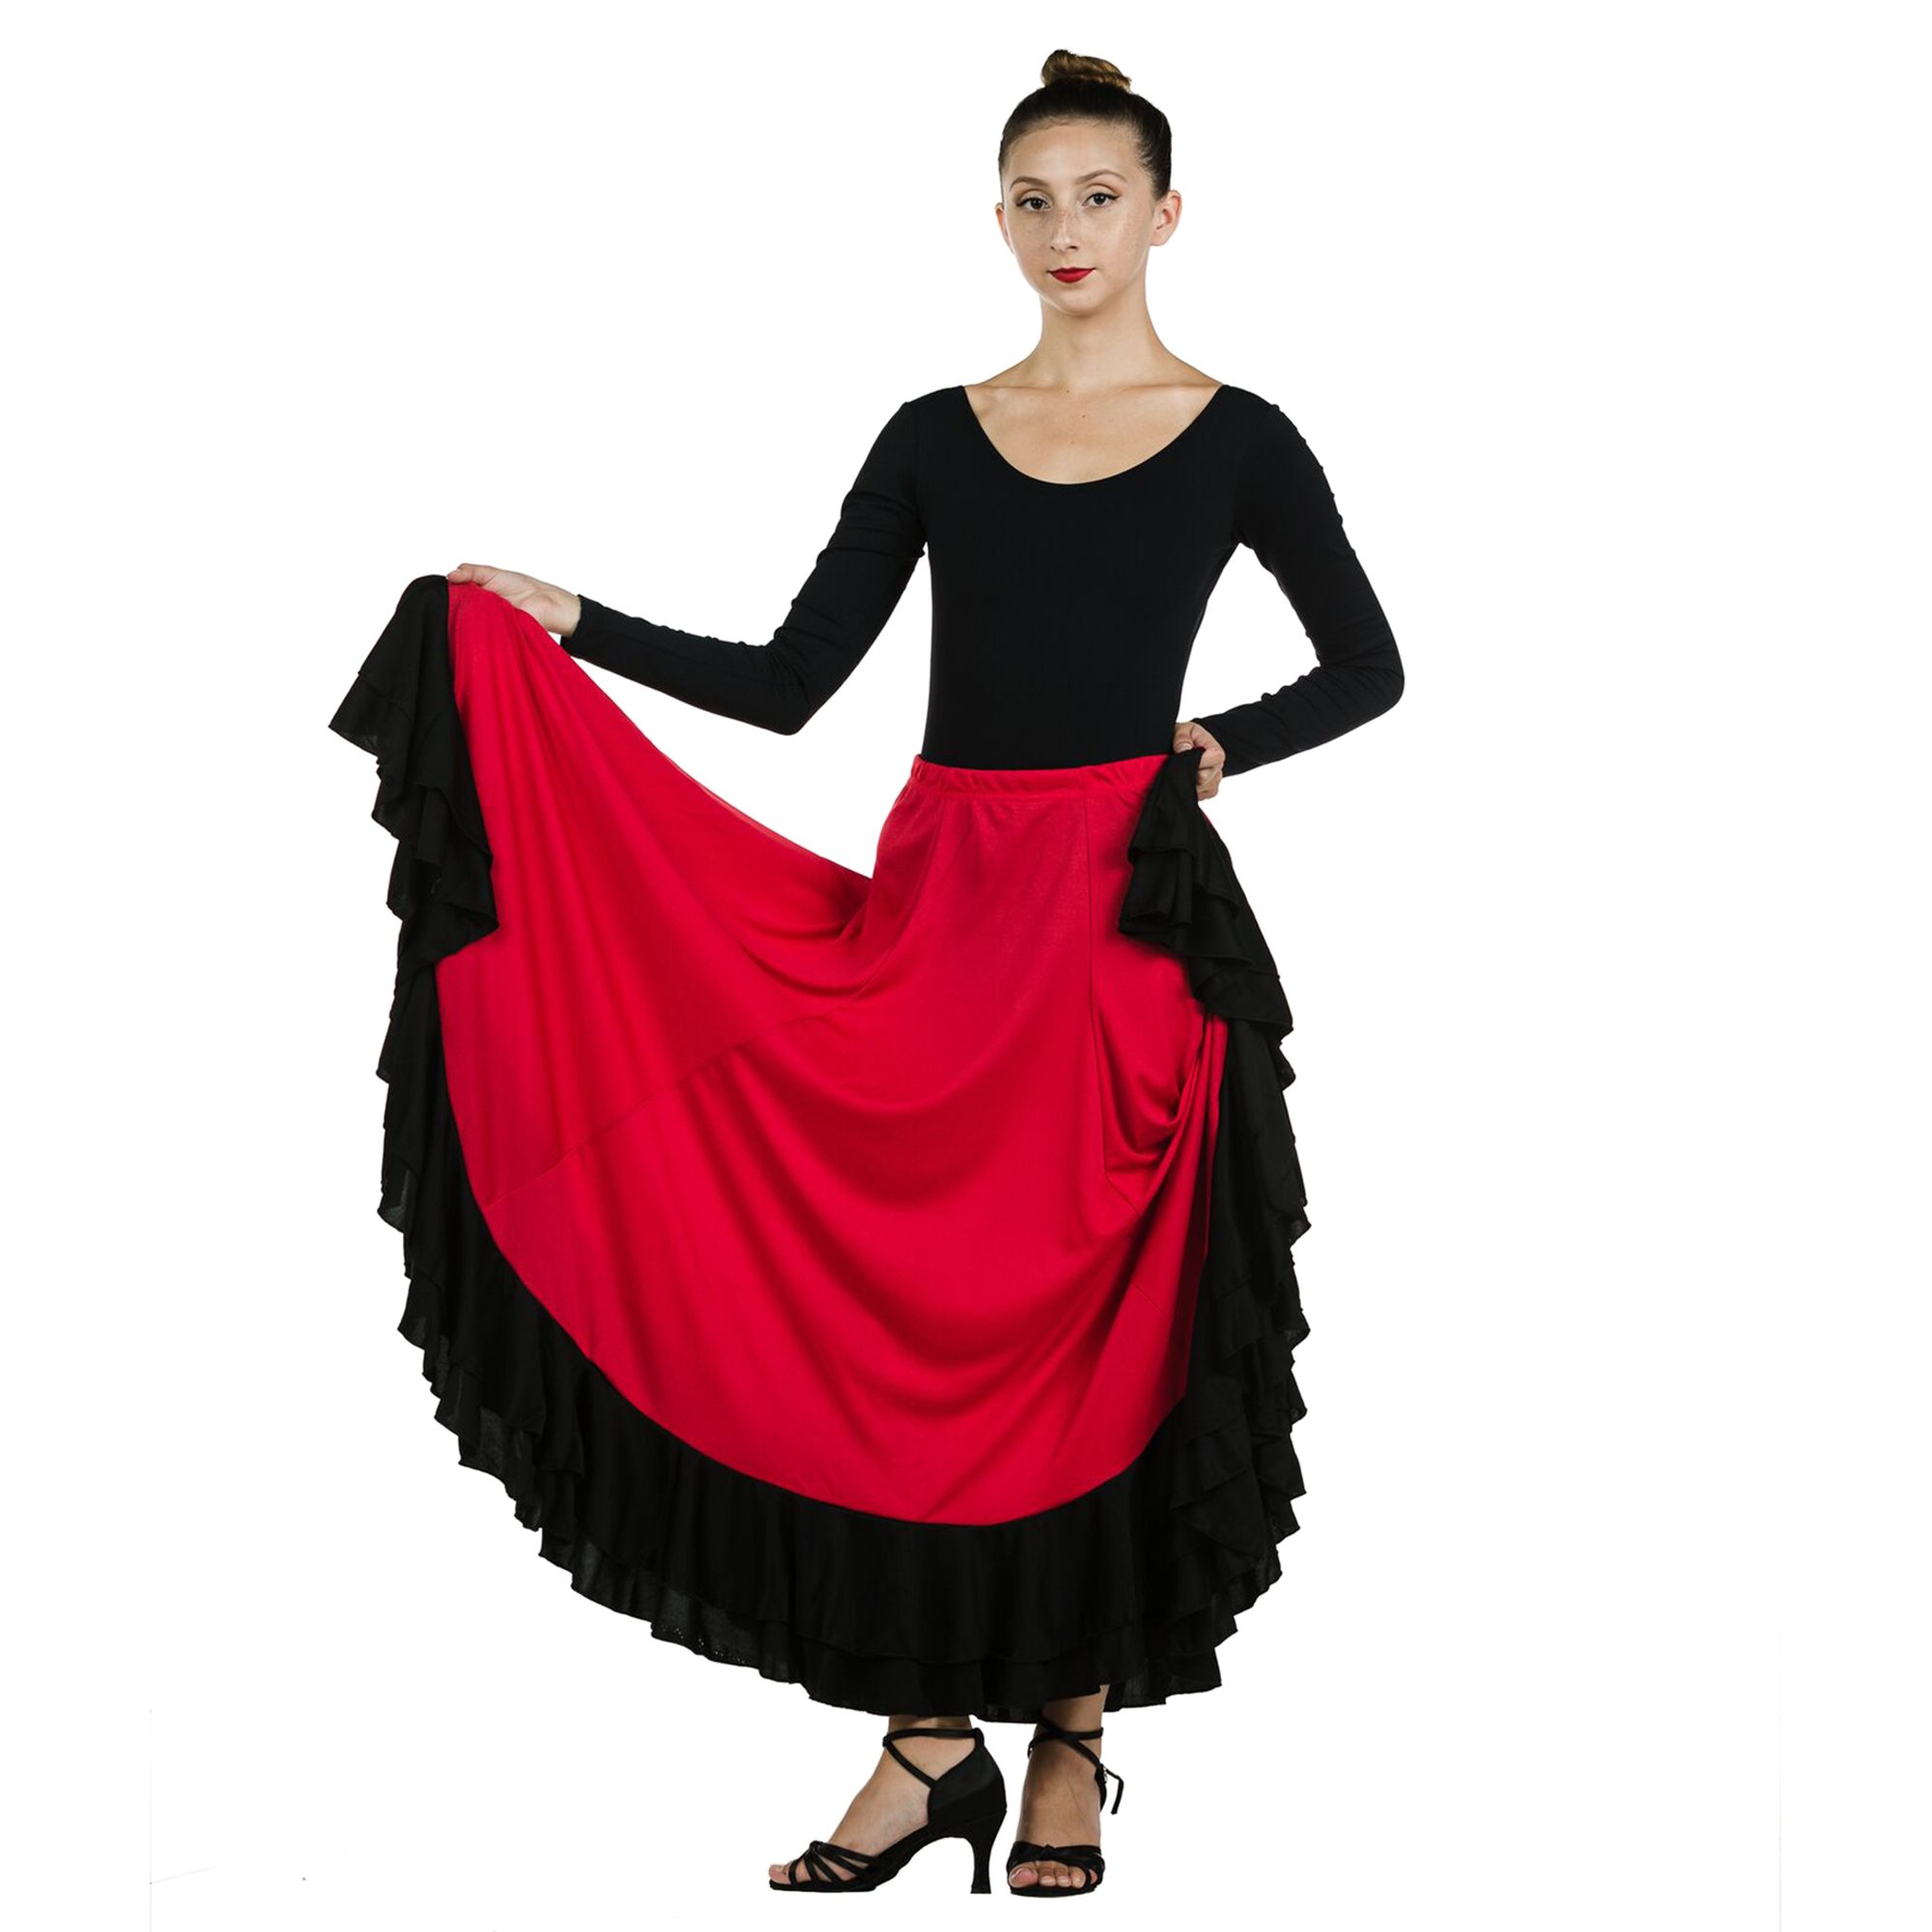 Danzcue Flamenco Full Circle Ruffles Skirt - Click Image to Close